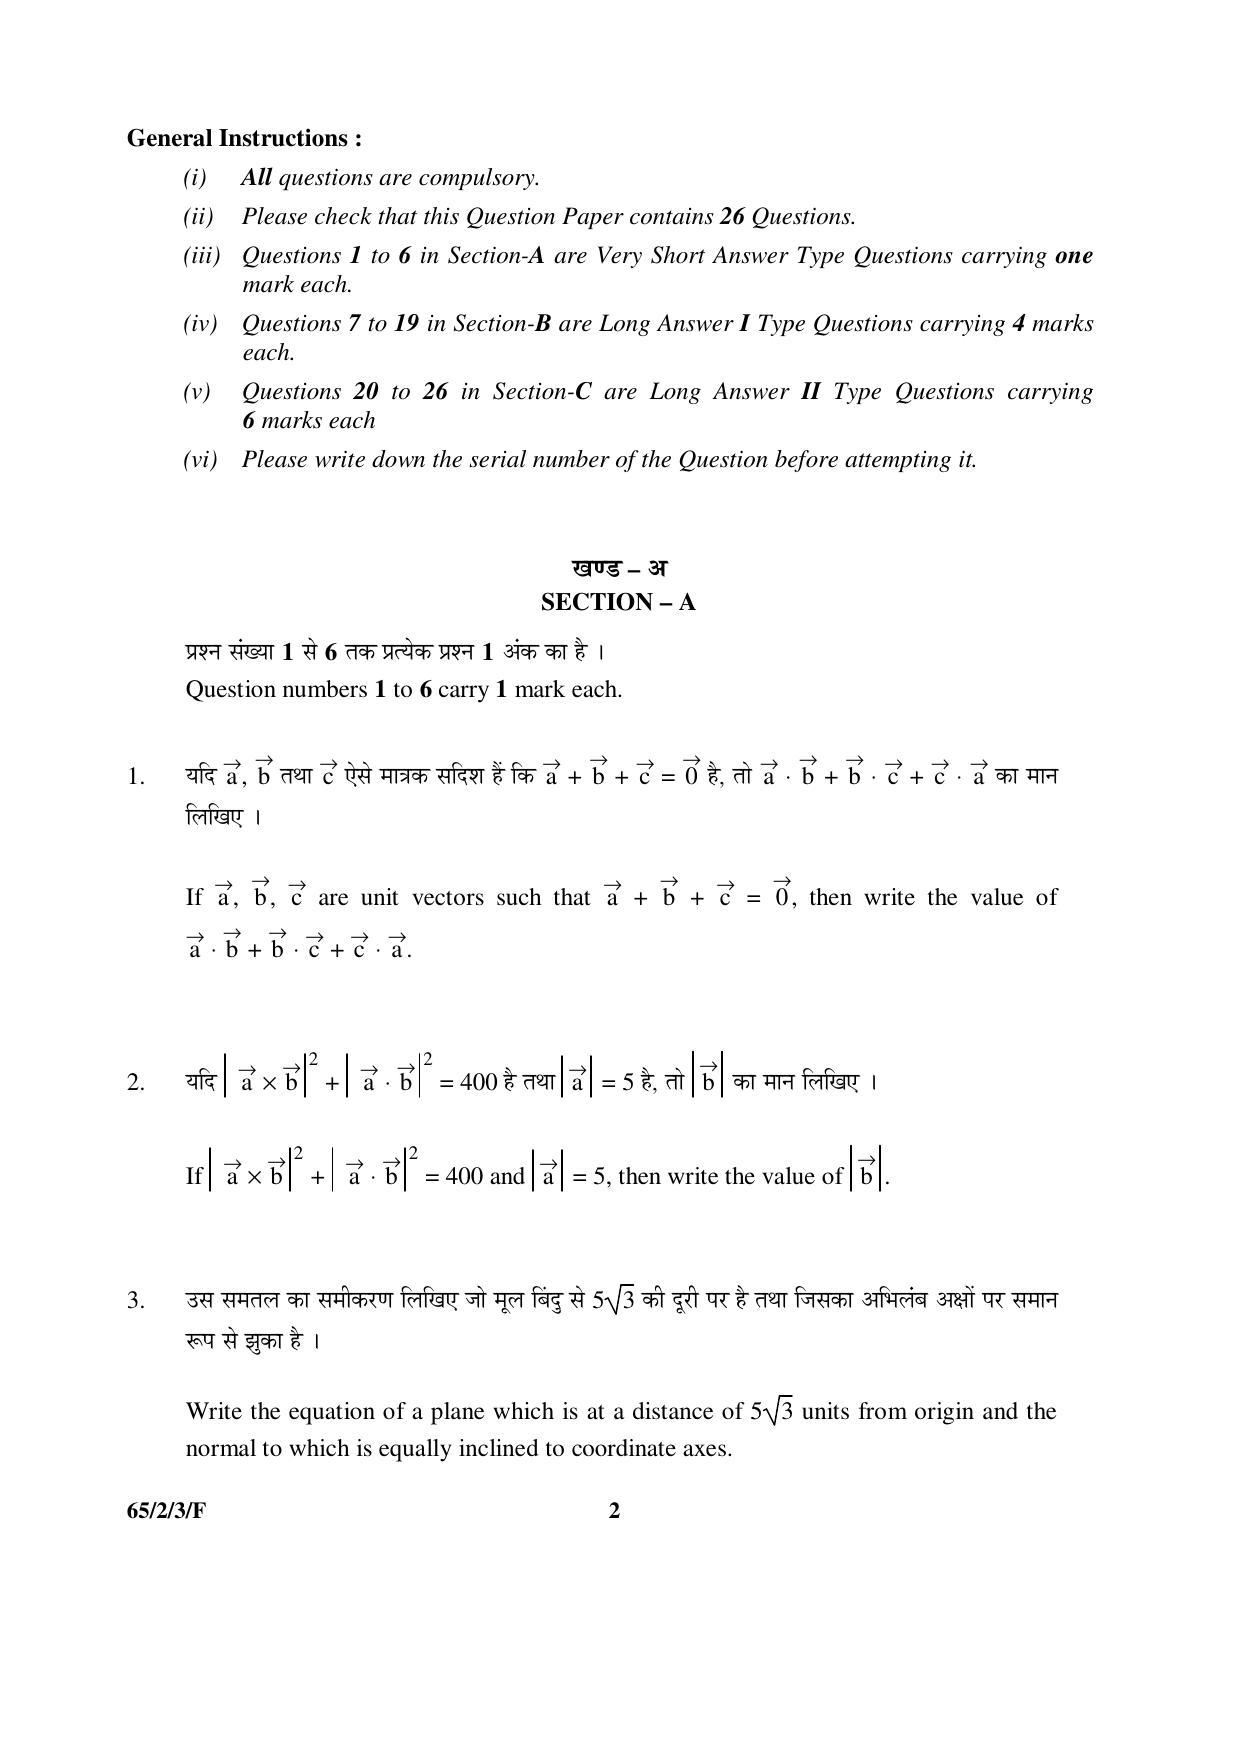 CBSE Class 12 65-2-3-F _Mathematics_ 2016 Question Paper - Page 2